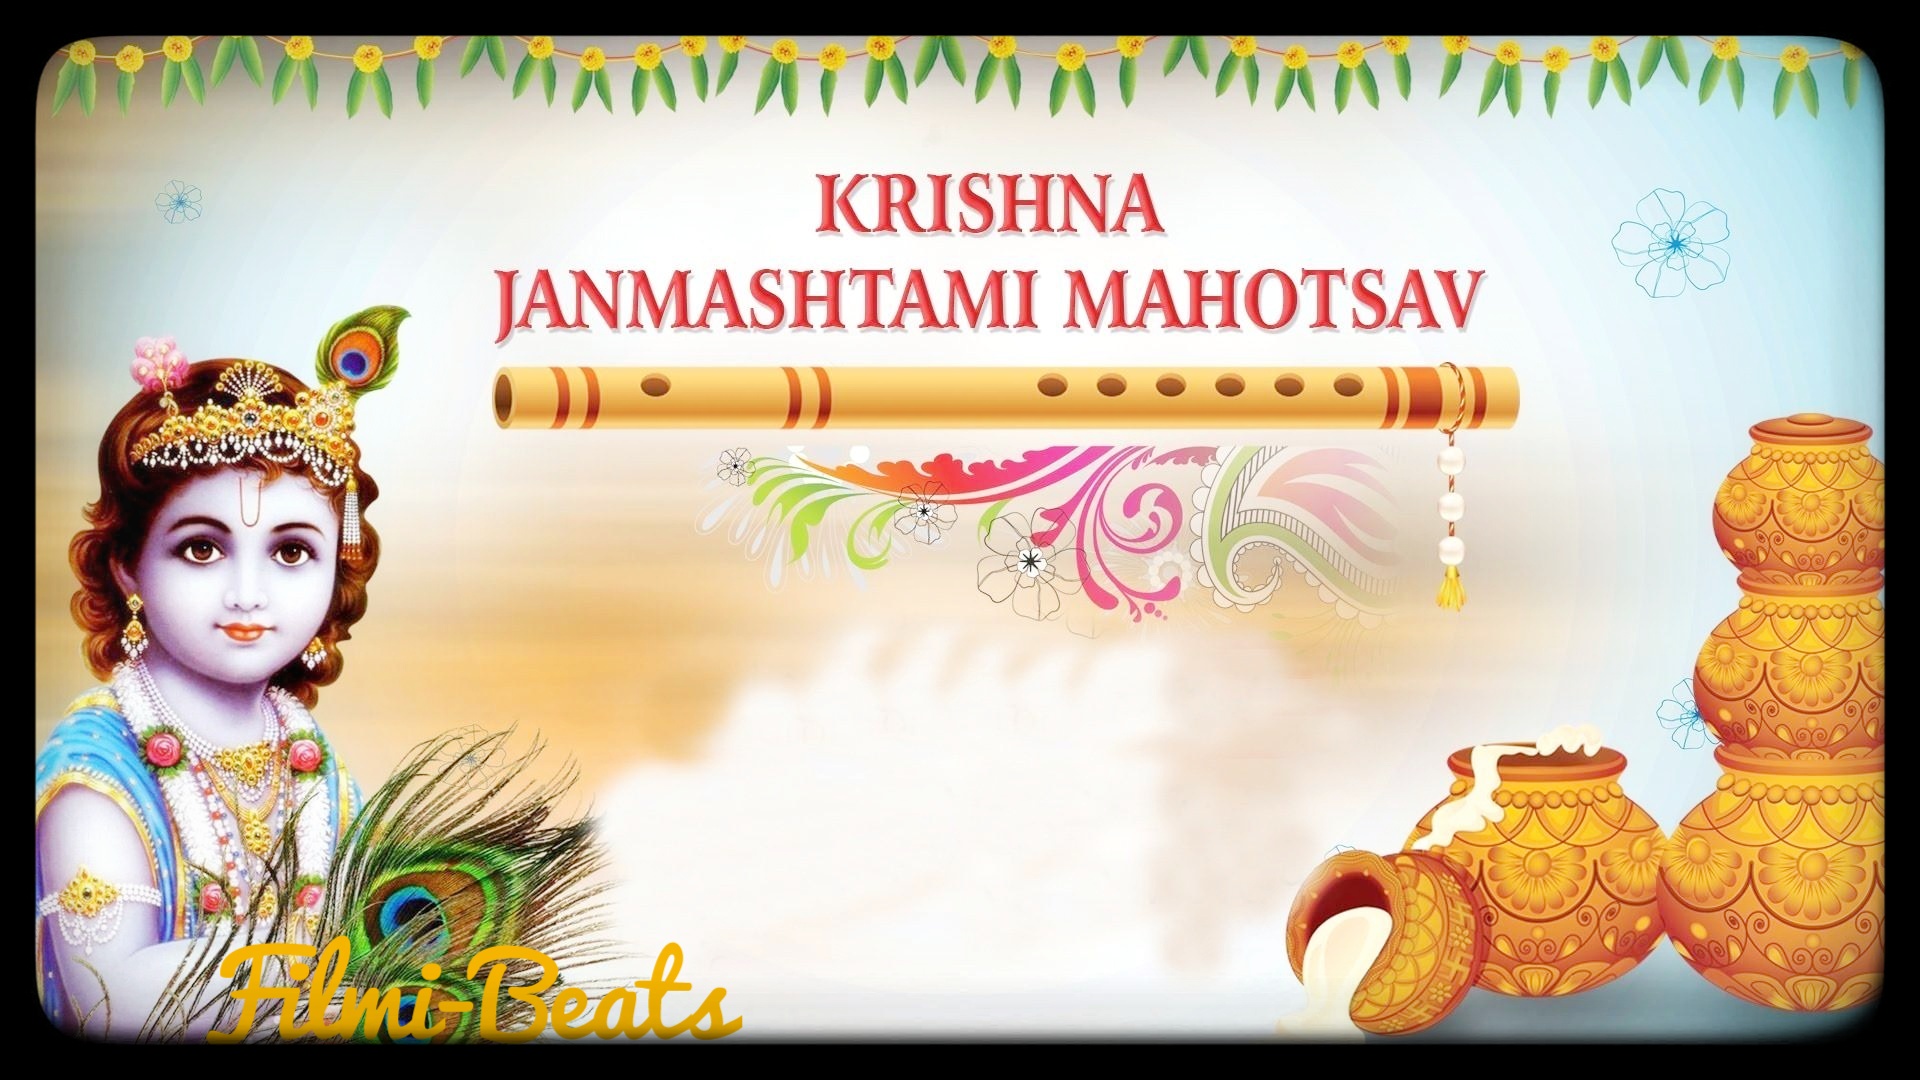 Krishna Janmashtami 2021 wallpapers